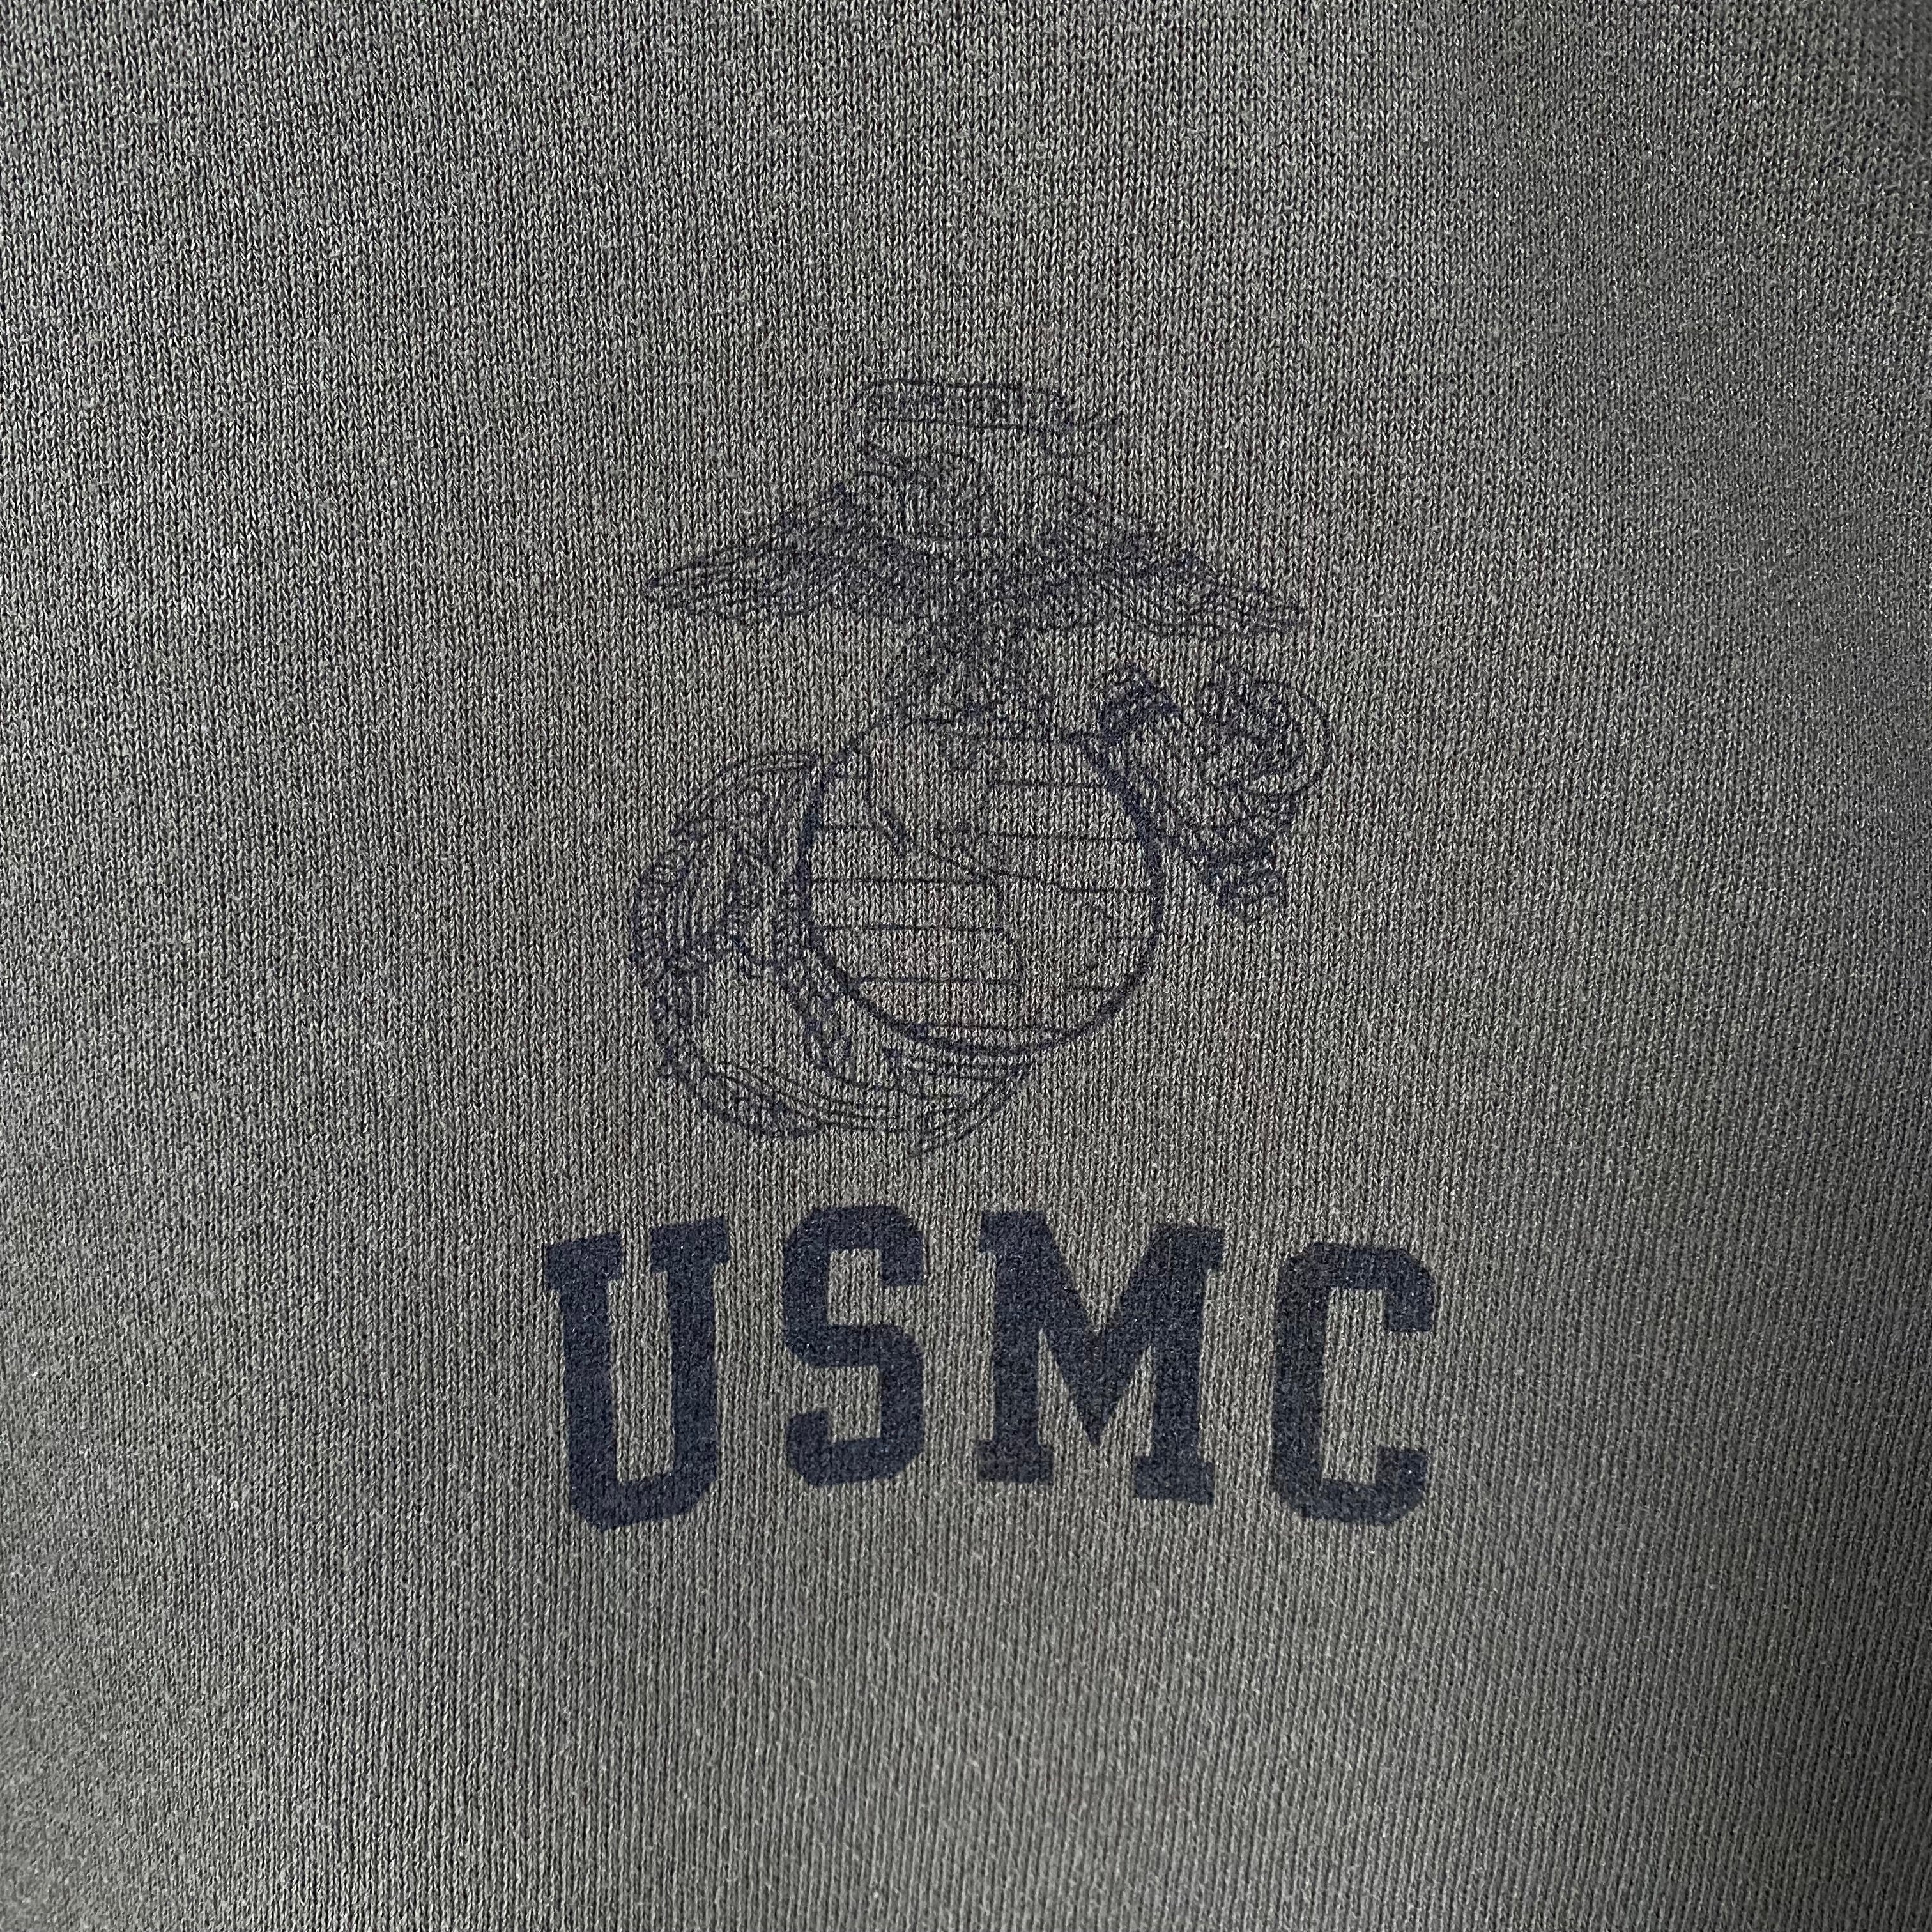 [ ONLY ONE ! ] U.S.M.C TRAINING SWEAT SHIRTS / U.S. MILITARY